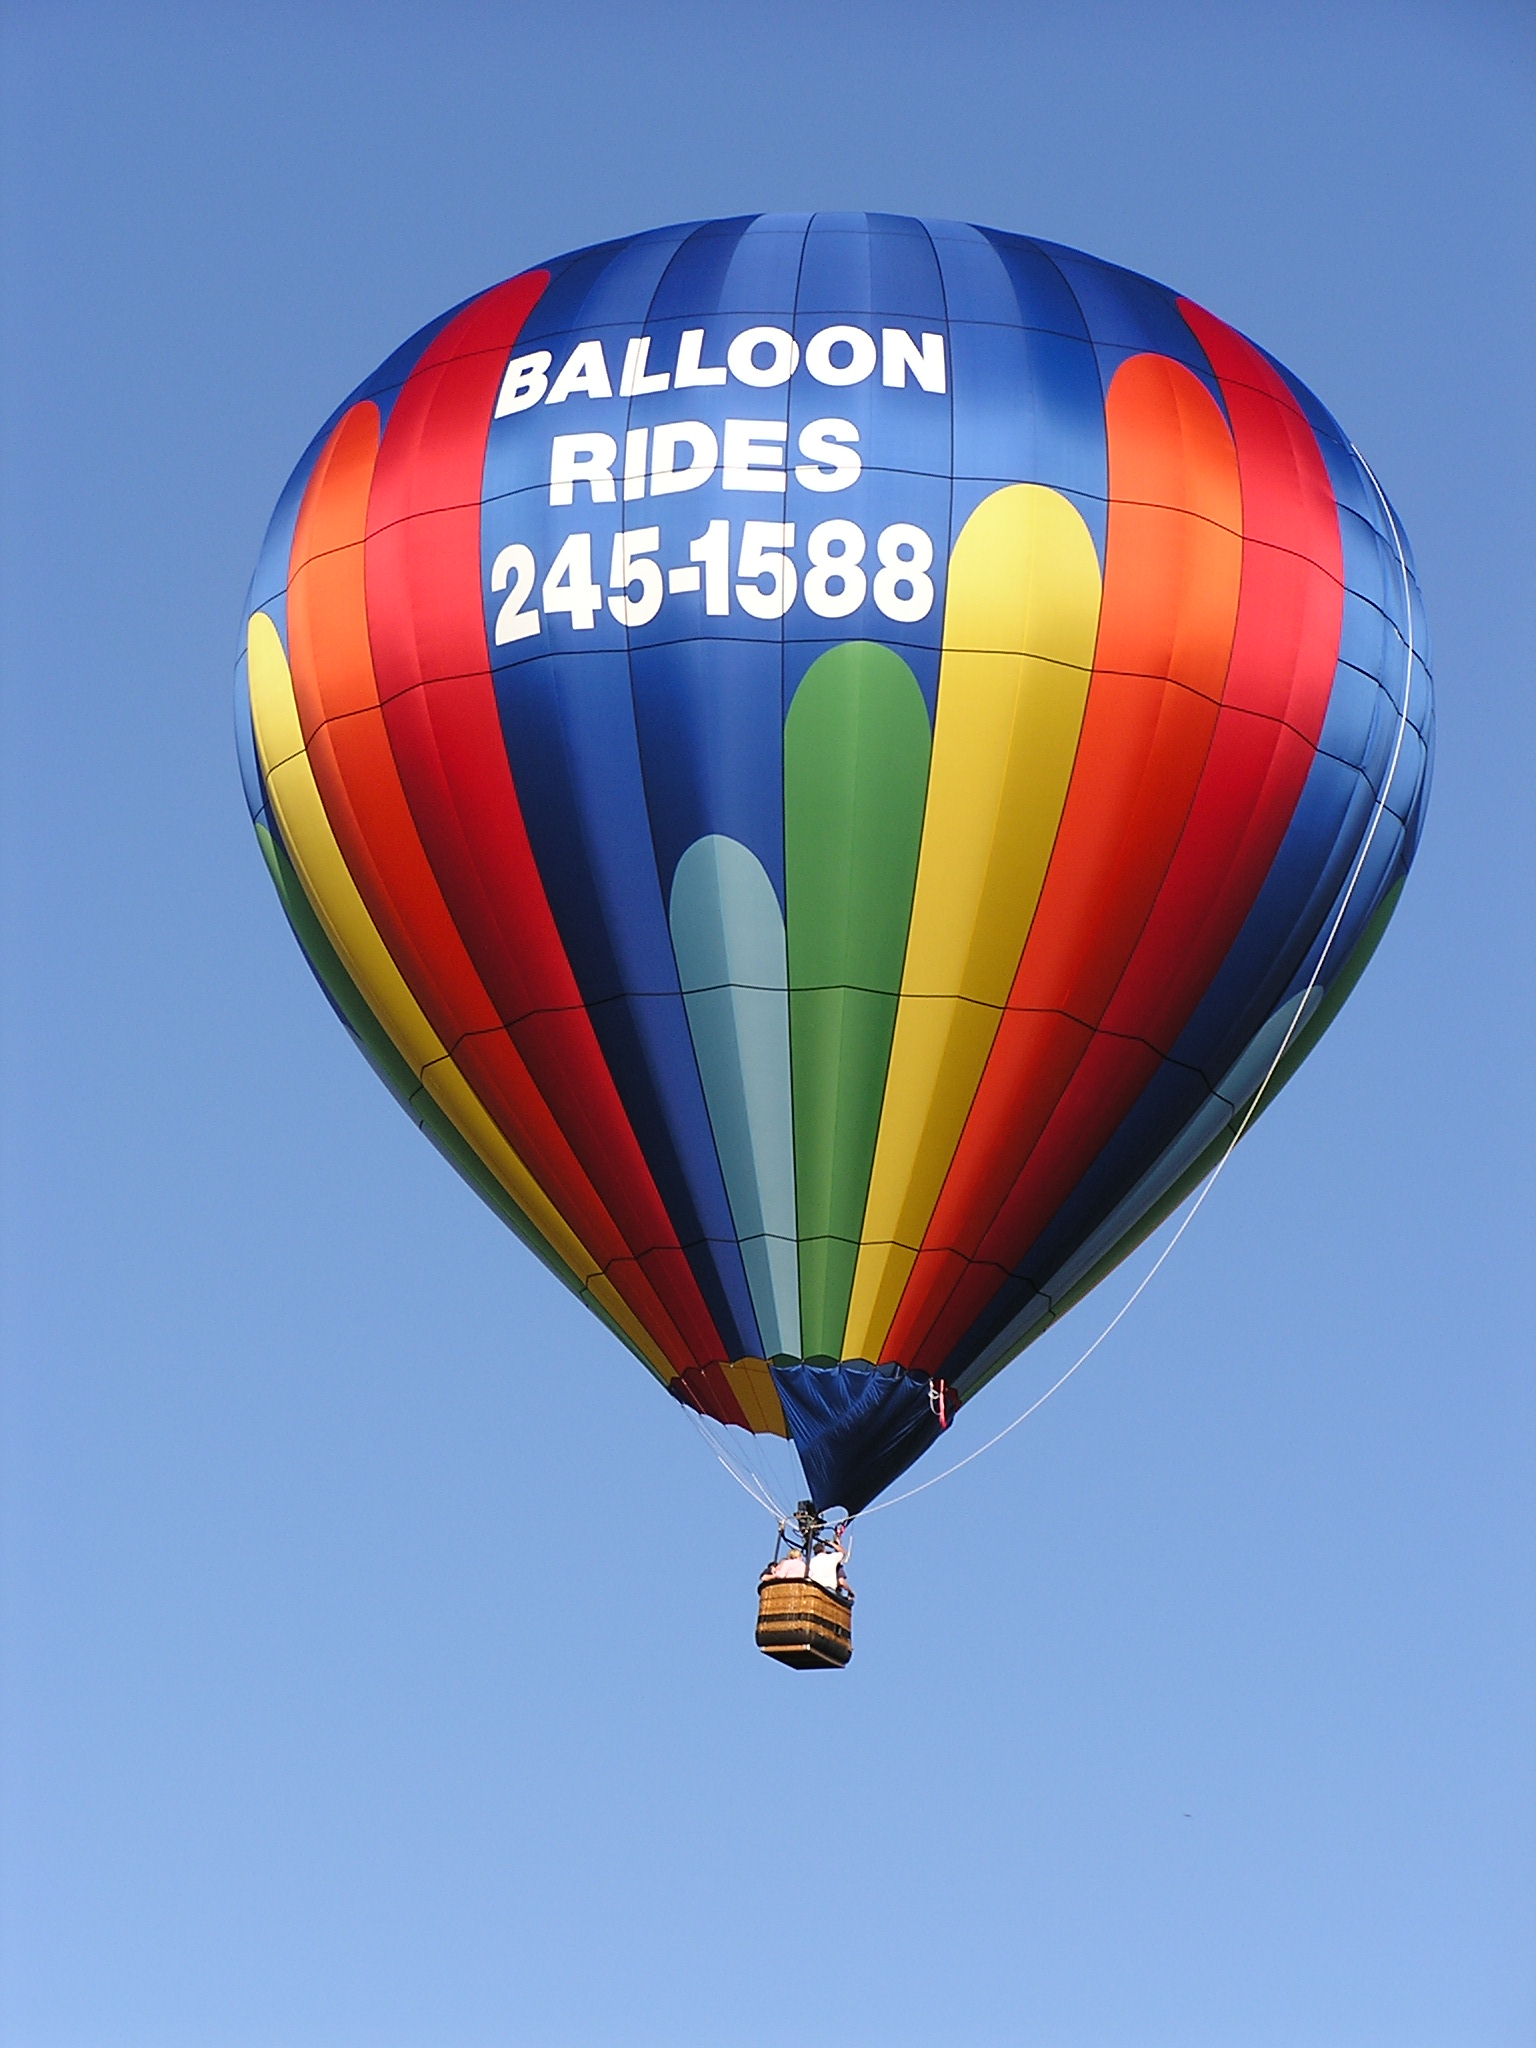 04-21-2013 Balloon Ride